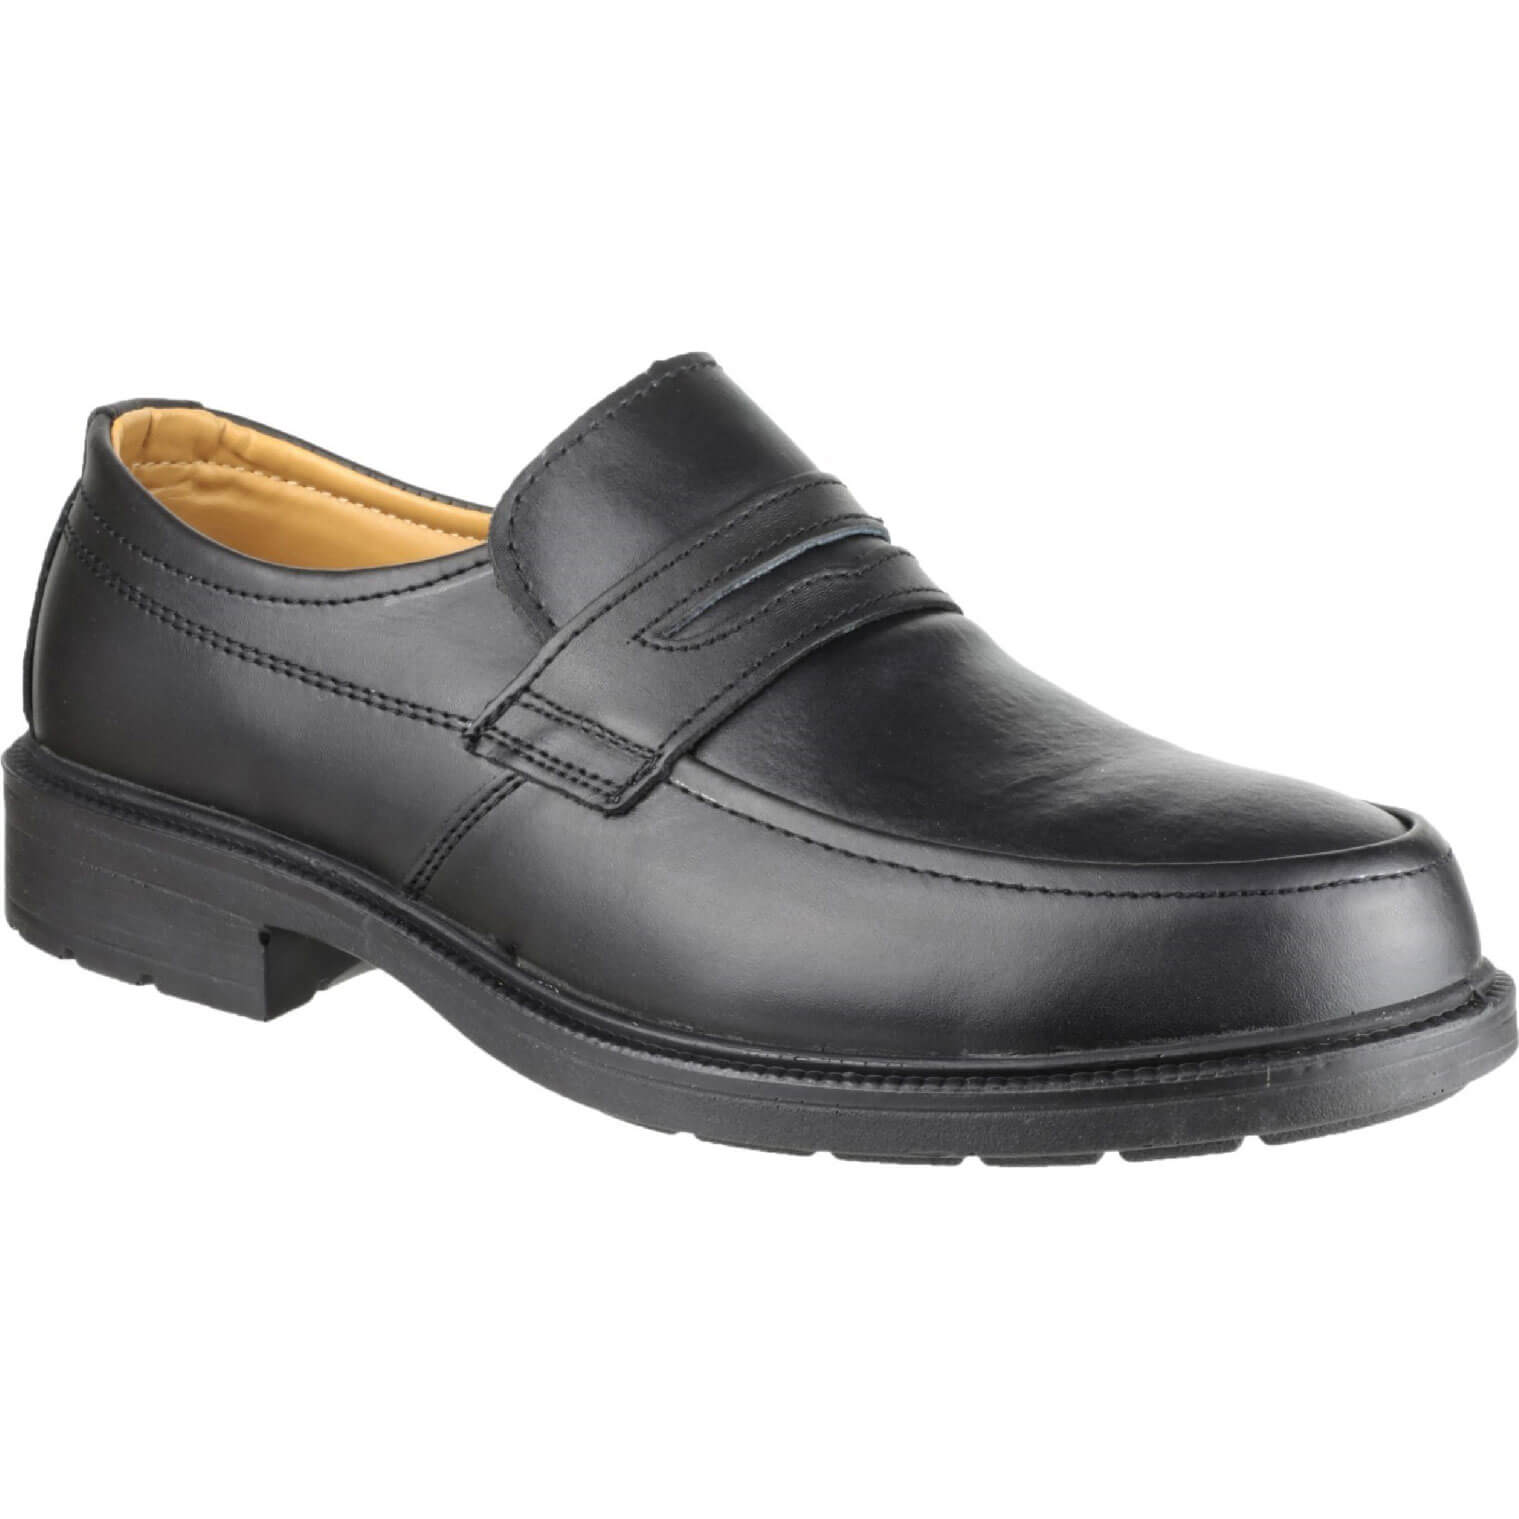 Image of Amblers Safety FS46 Safety Slip On Shoe Black Size 13